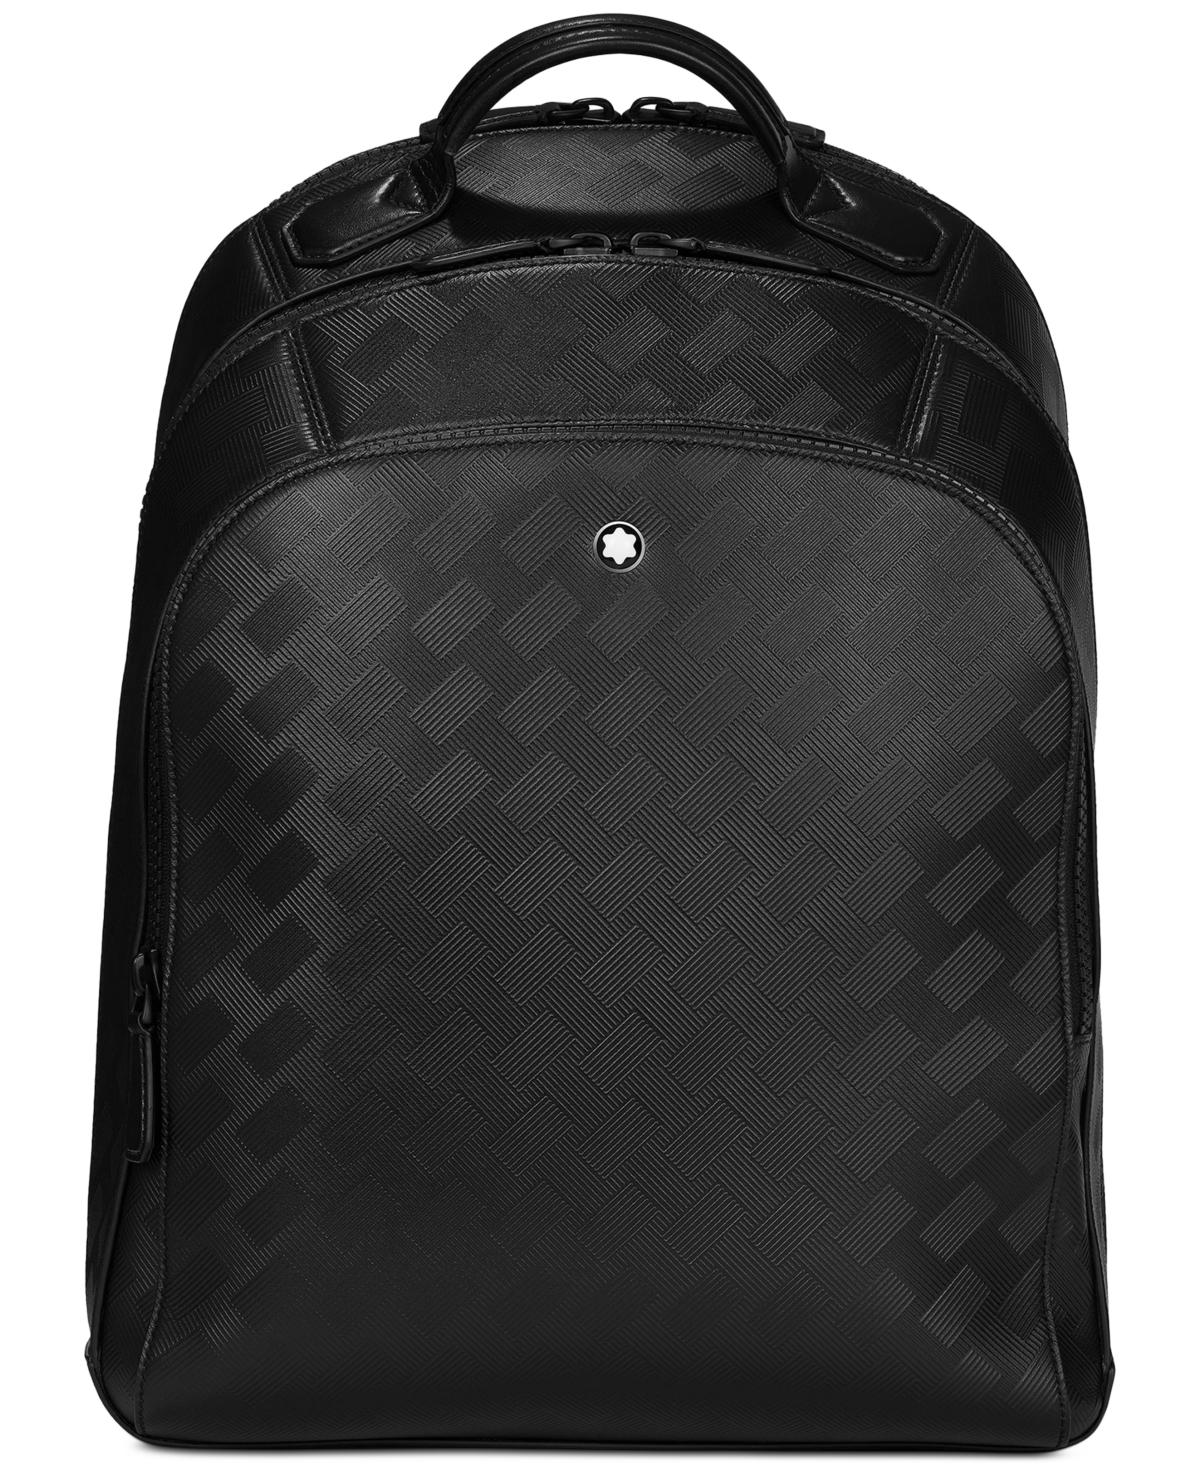 Extreme 3.0 Backpack - Black